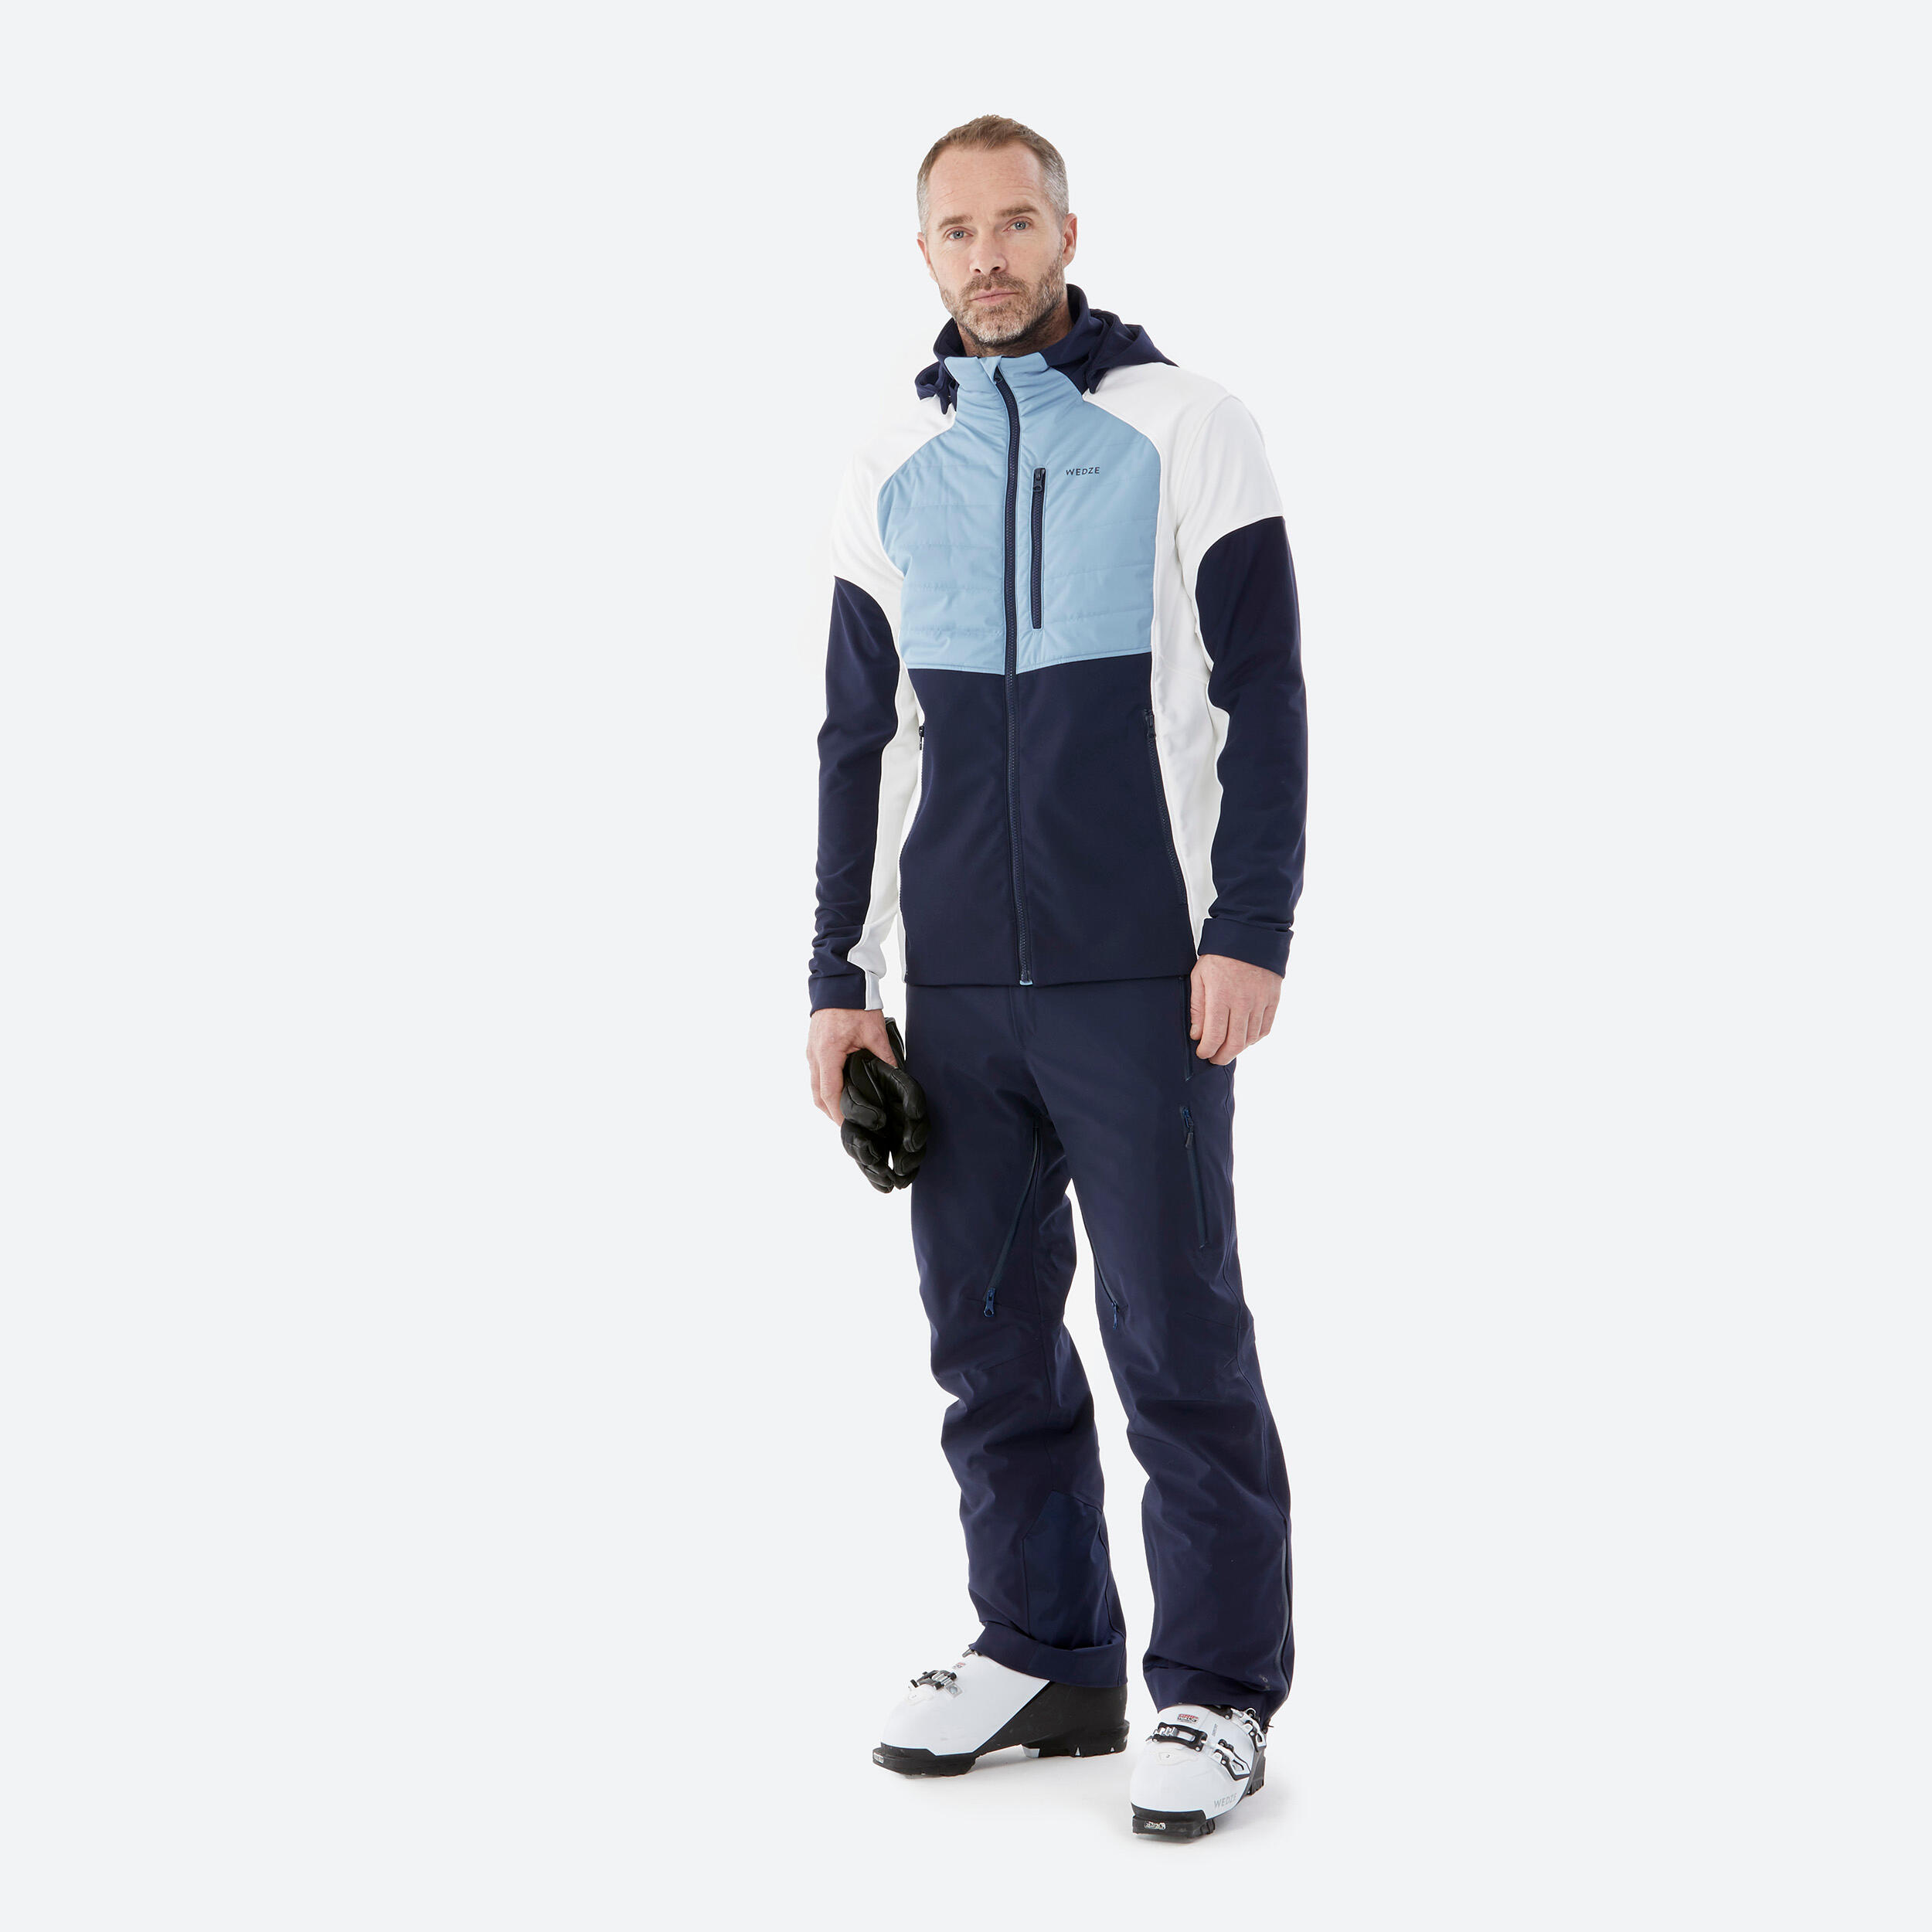 Men's lightweight waterproof ski jacket - Dark and light blue, white 4/7